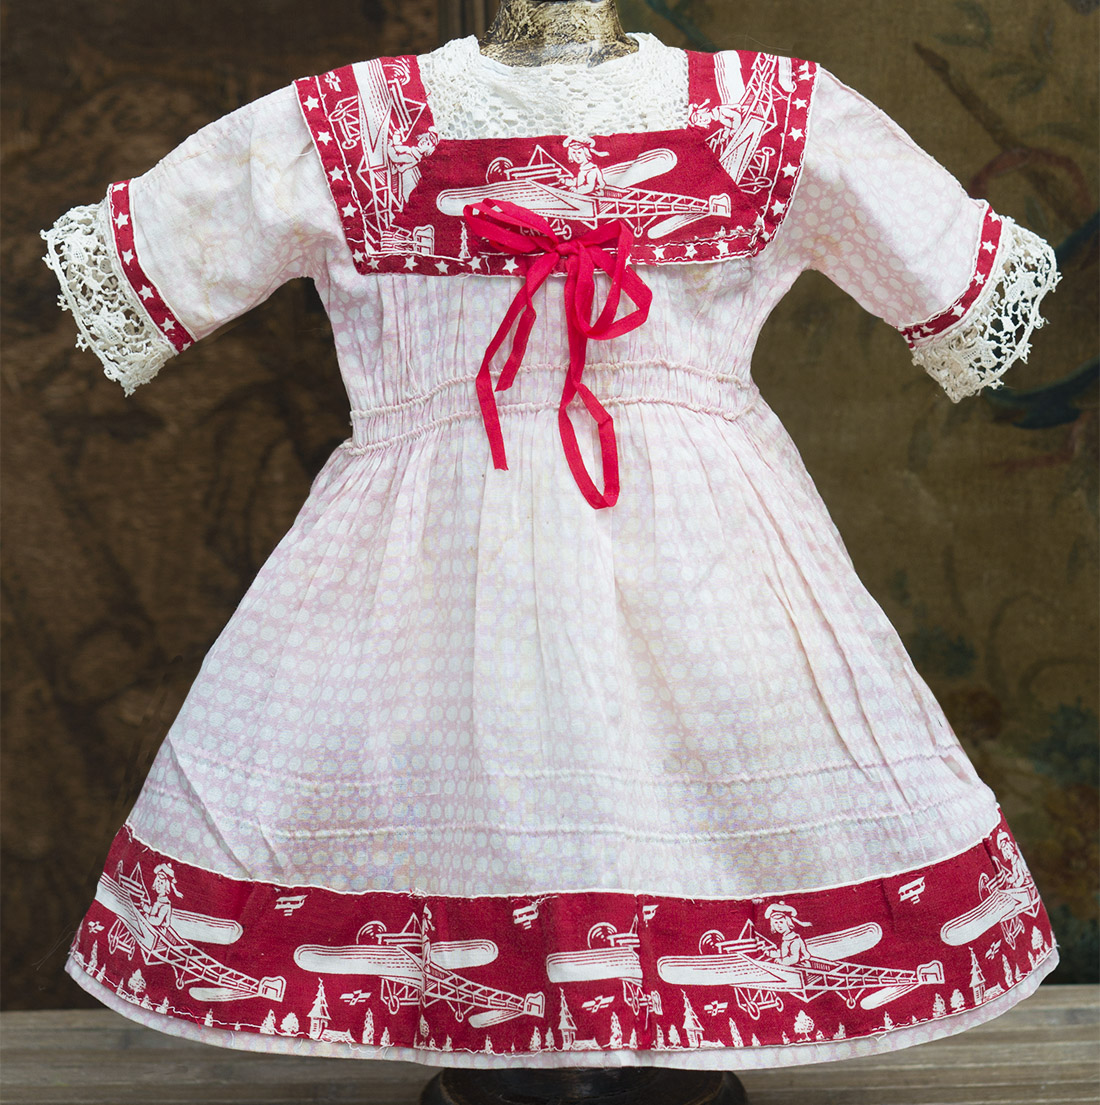  Antique Original Cotton Dress